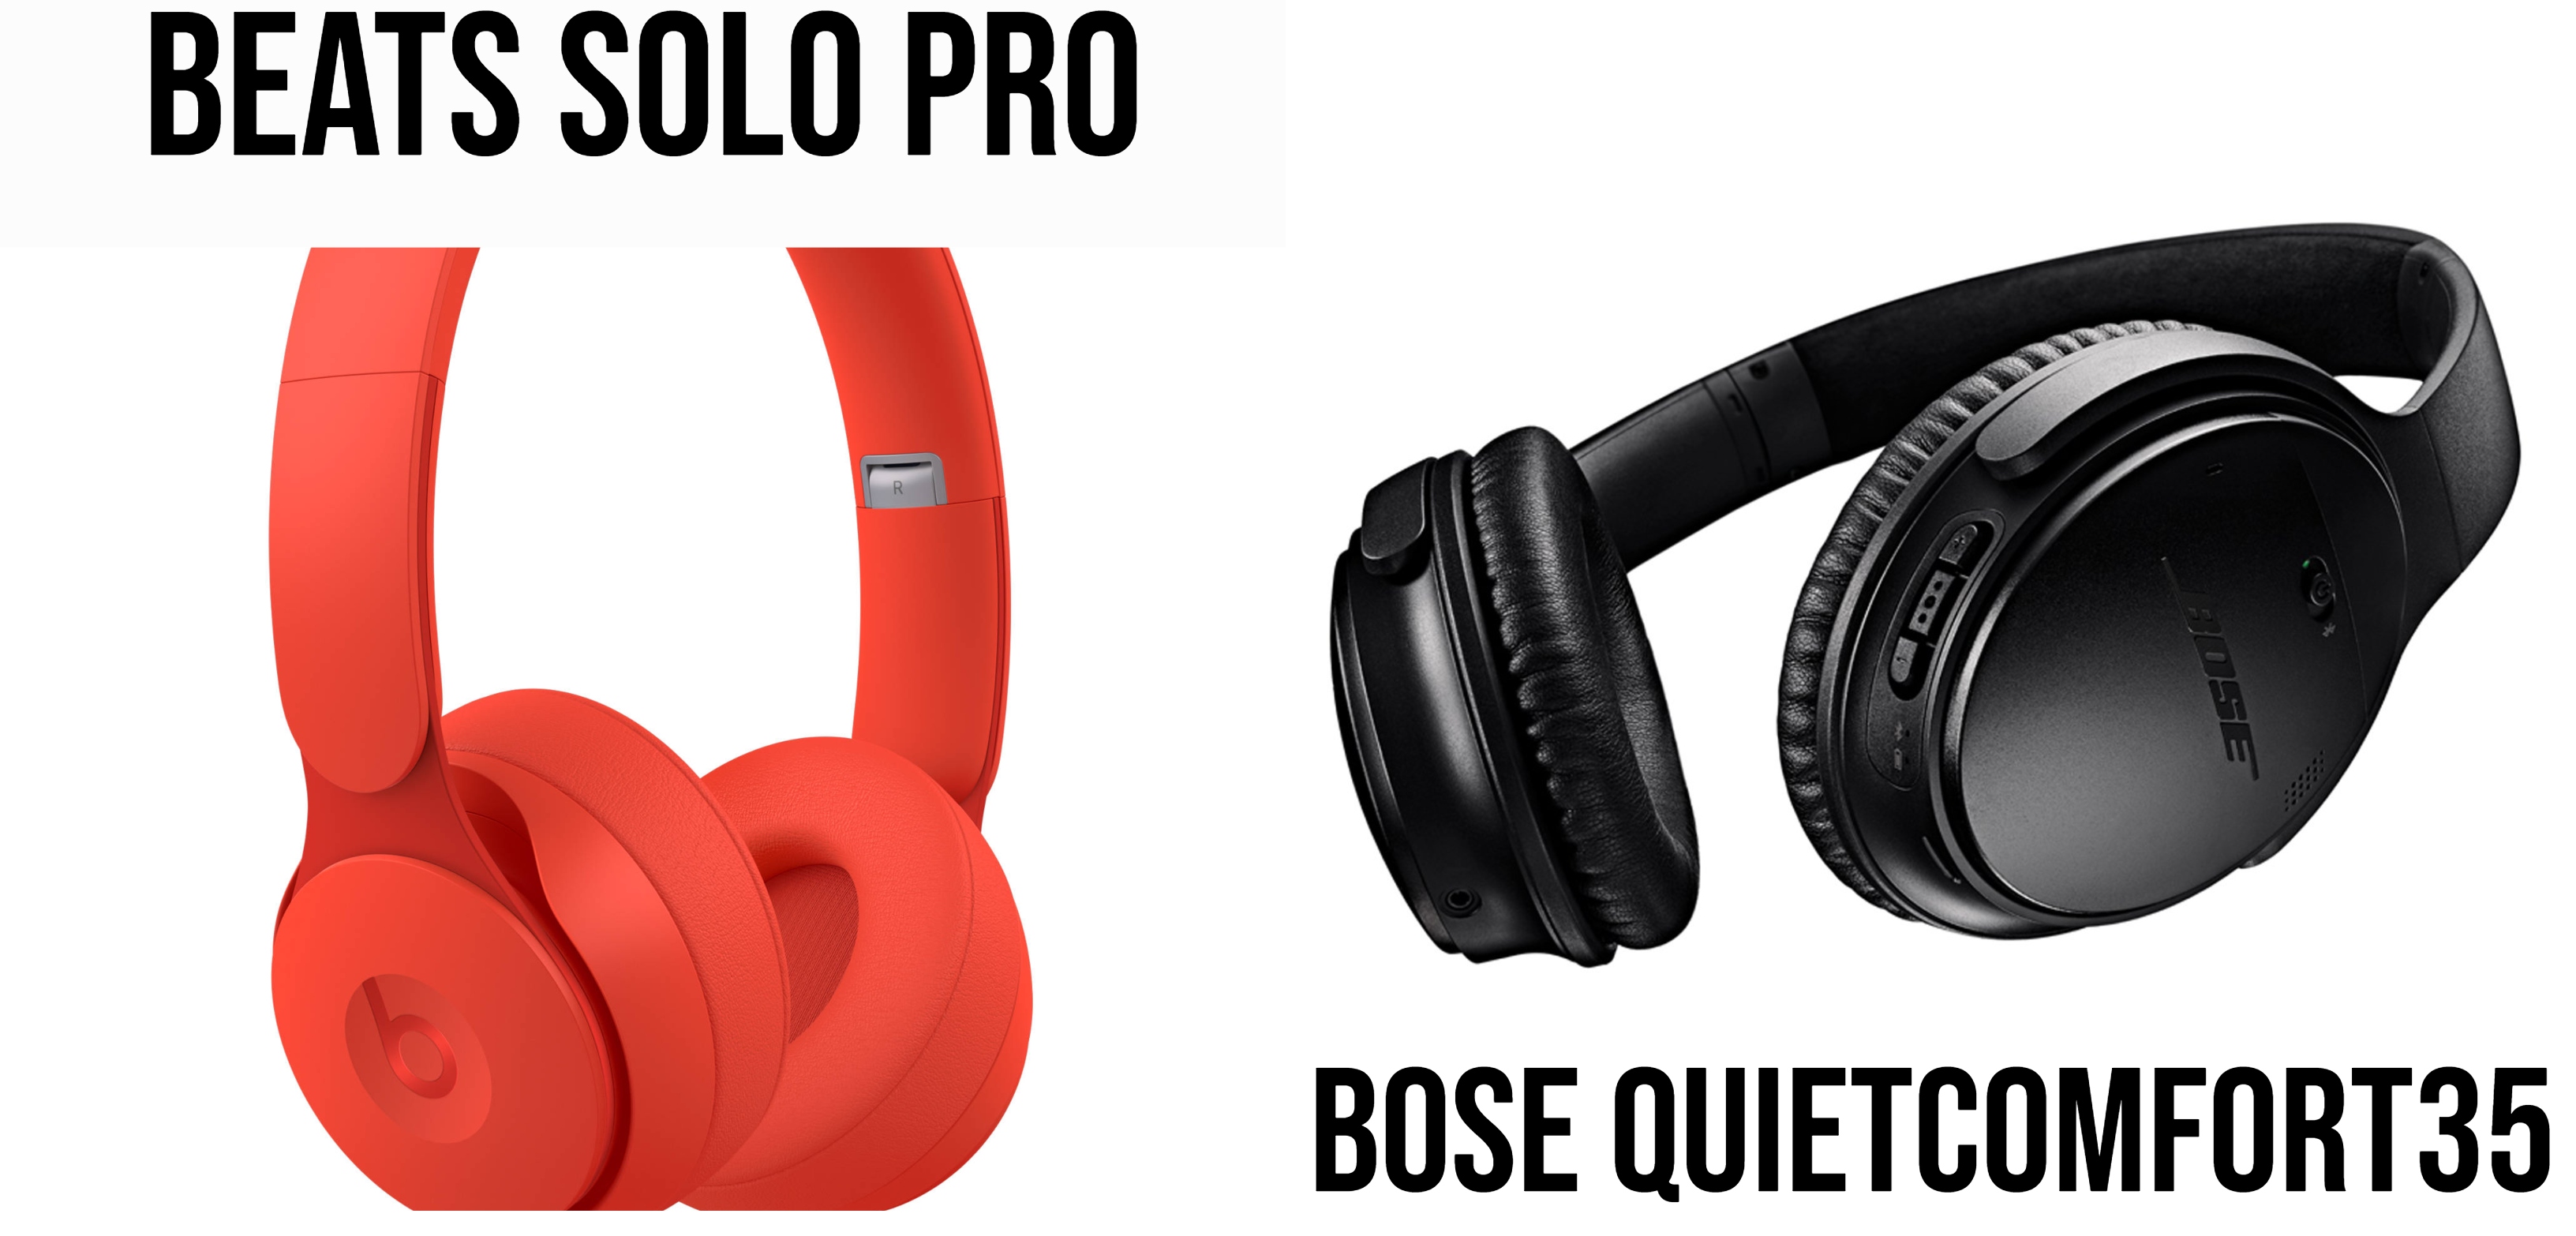 Beats Solo Pro vs Bose QuietComfort 35 collage